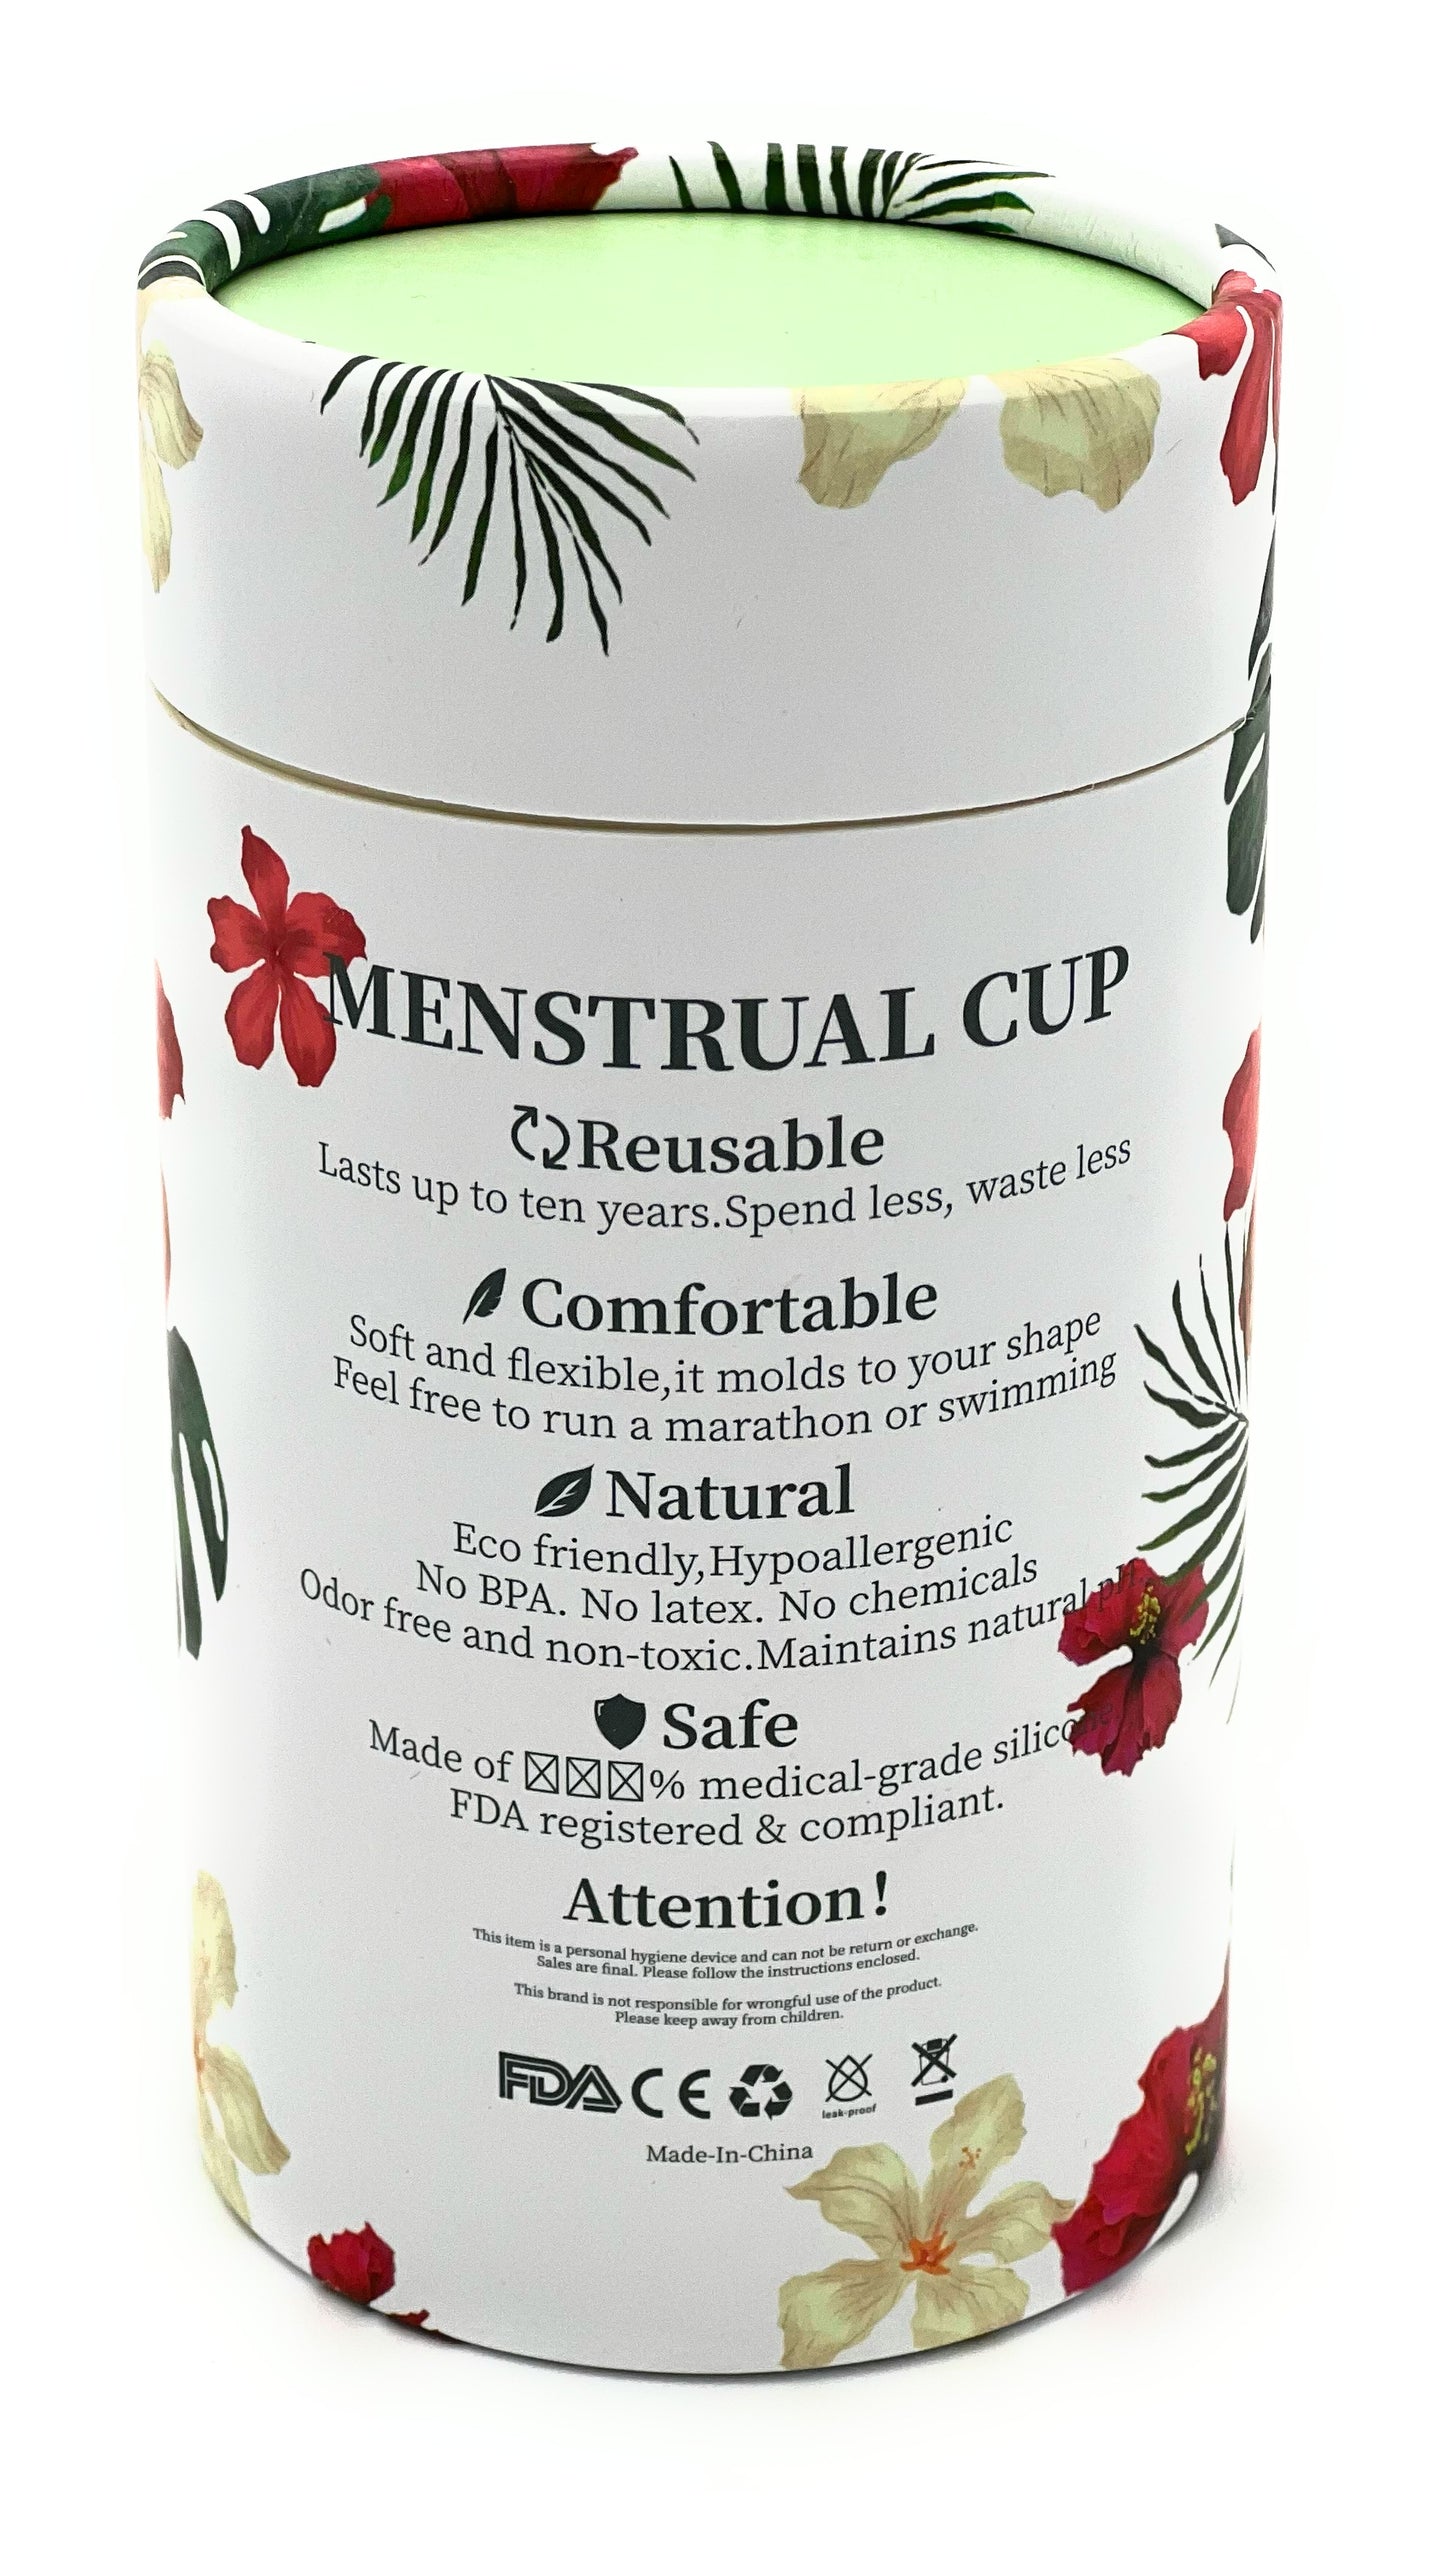 Why a menstrual cup? – Holistic Health Clinic